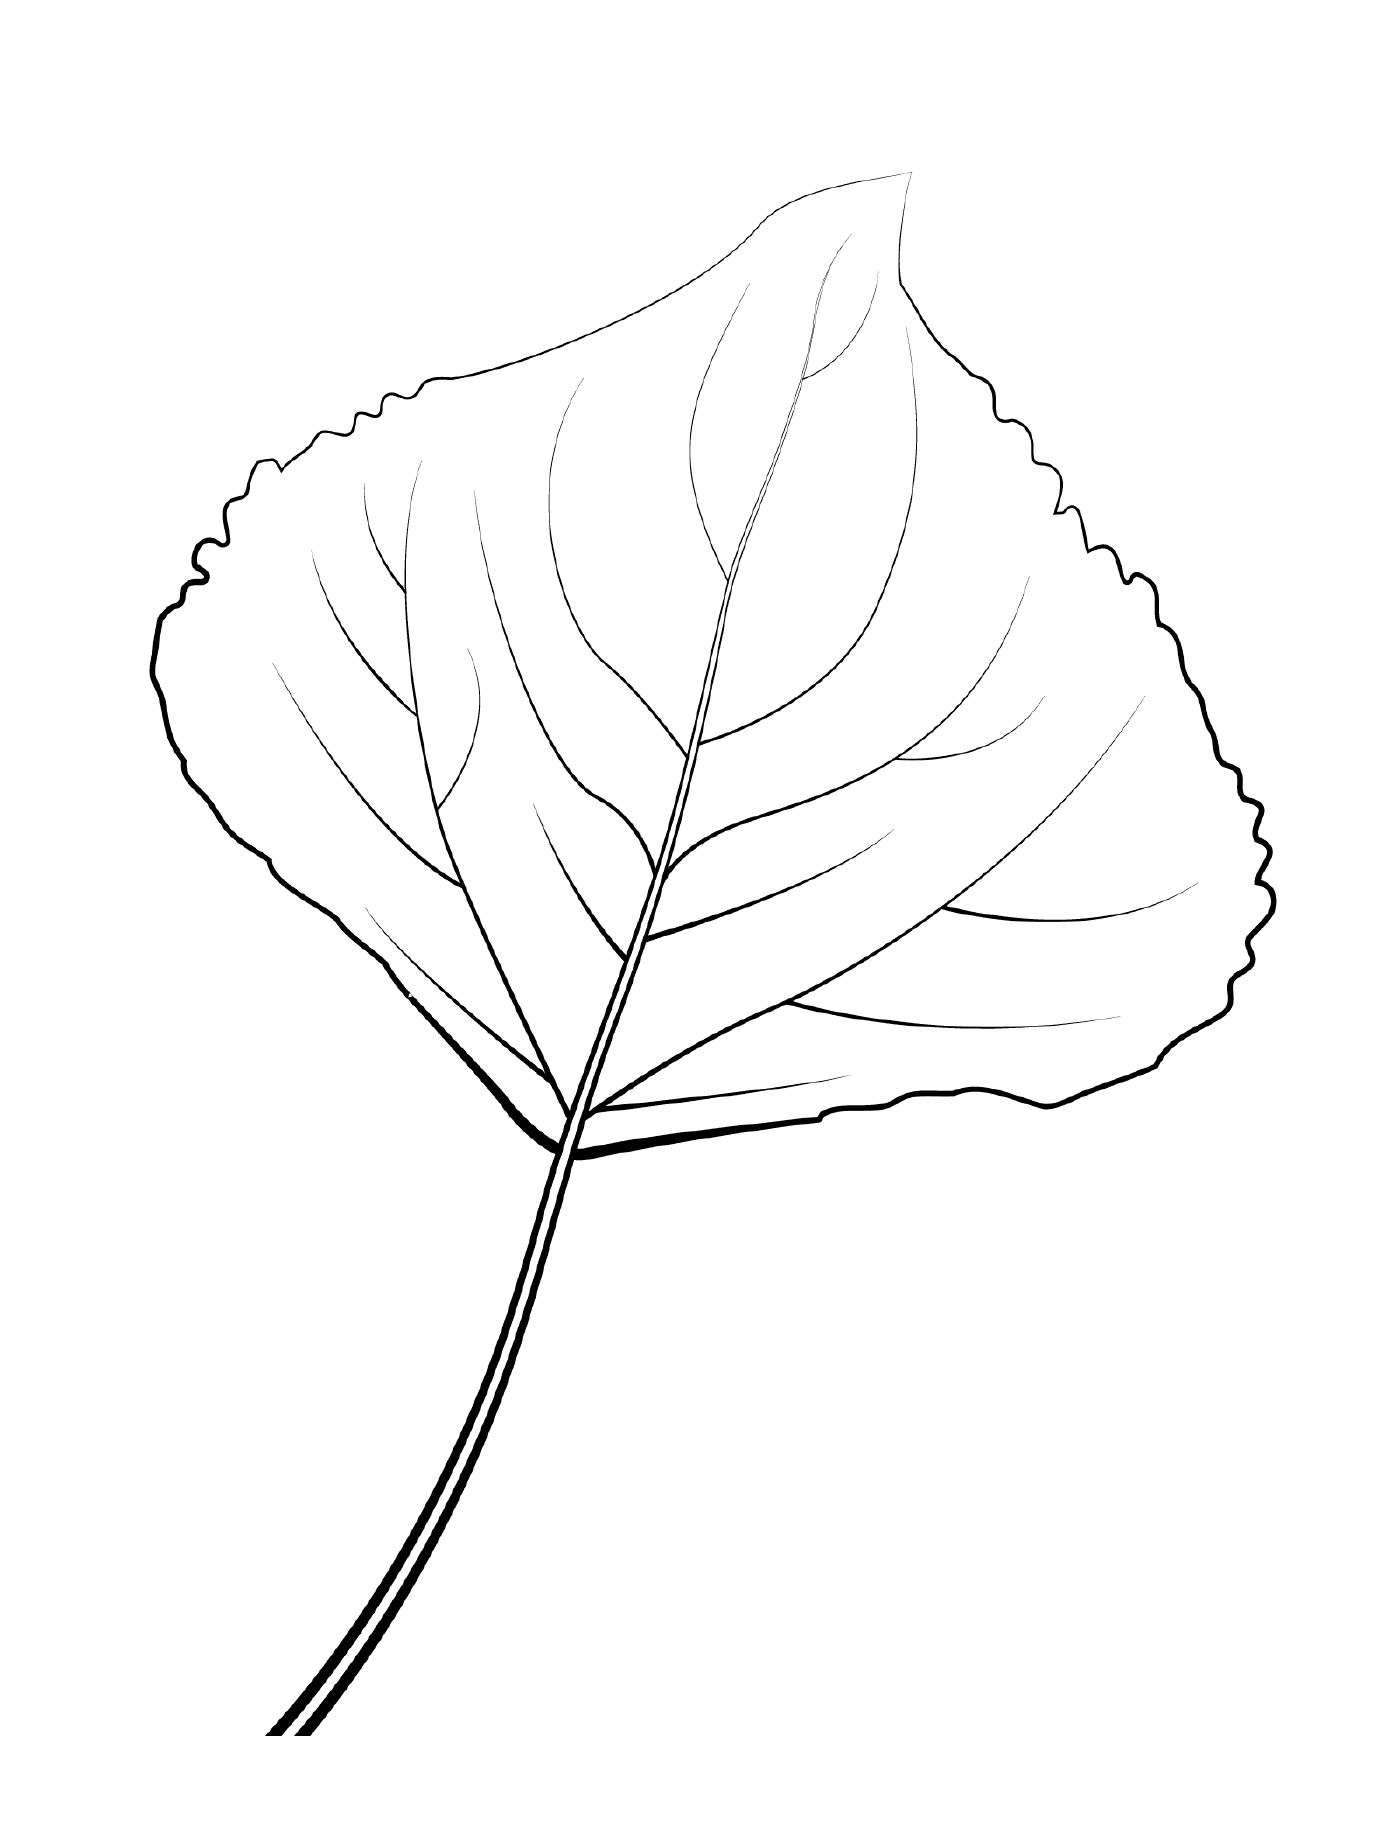  Lombard poplar leaf 